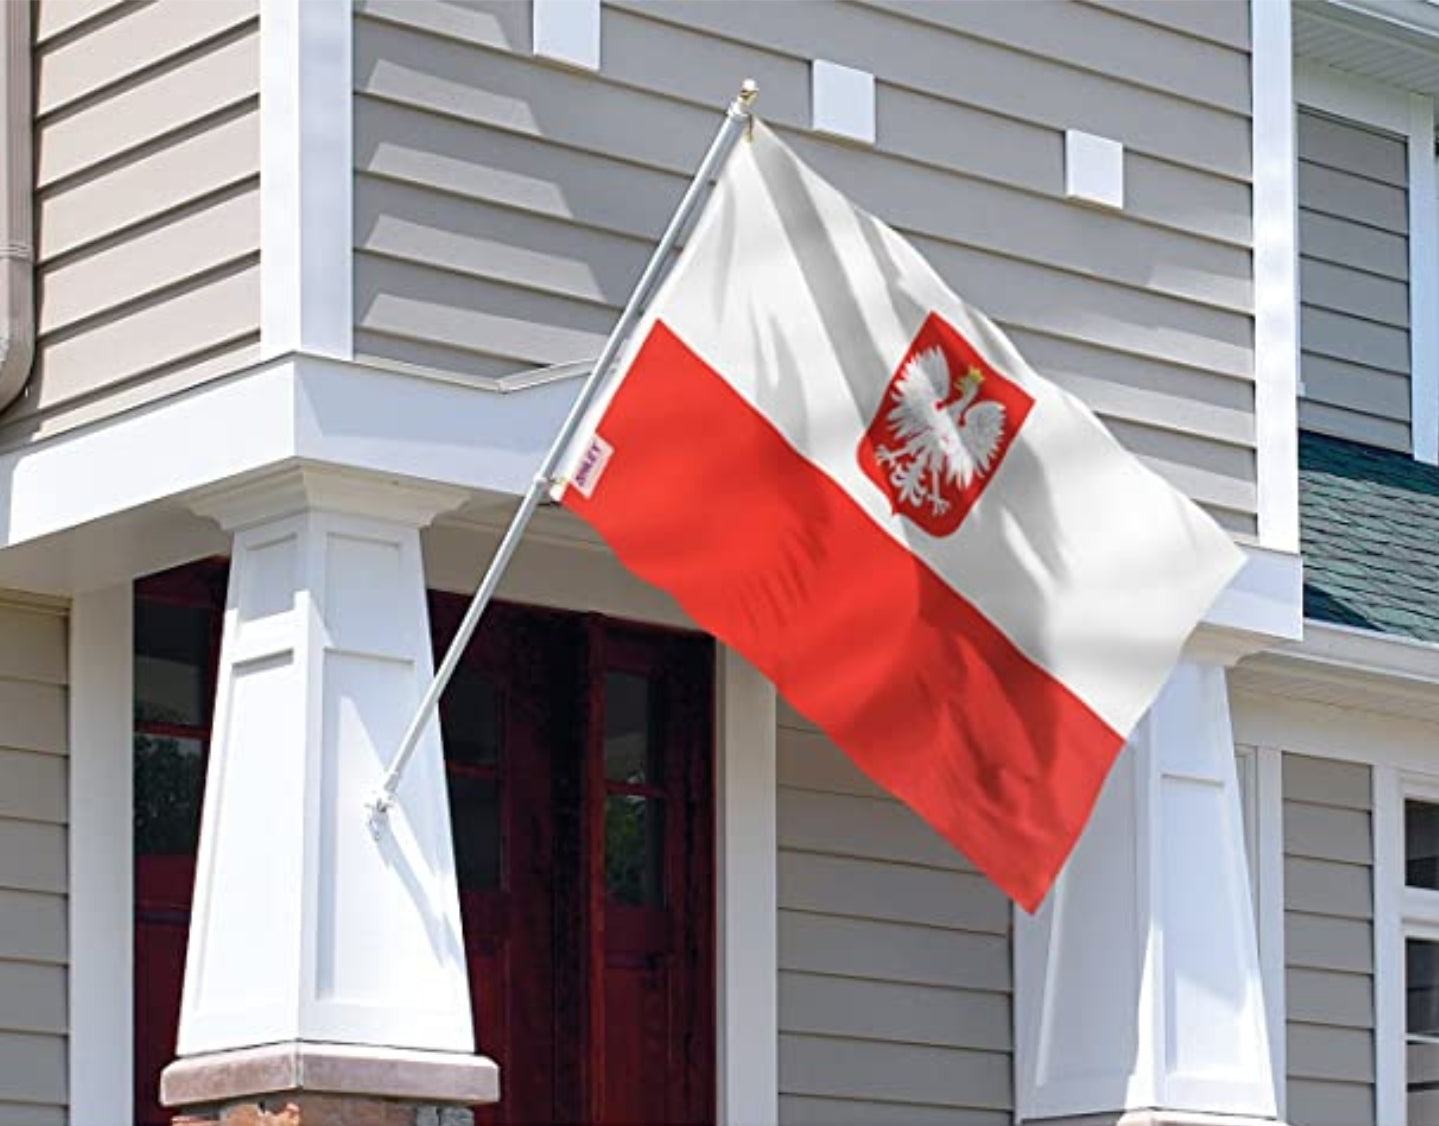 Poland Flag (w/ Eagle)